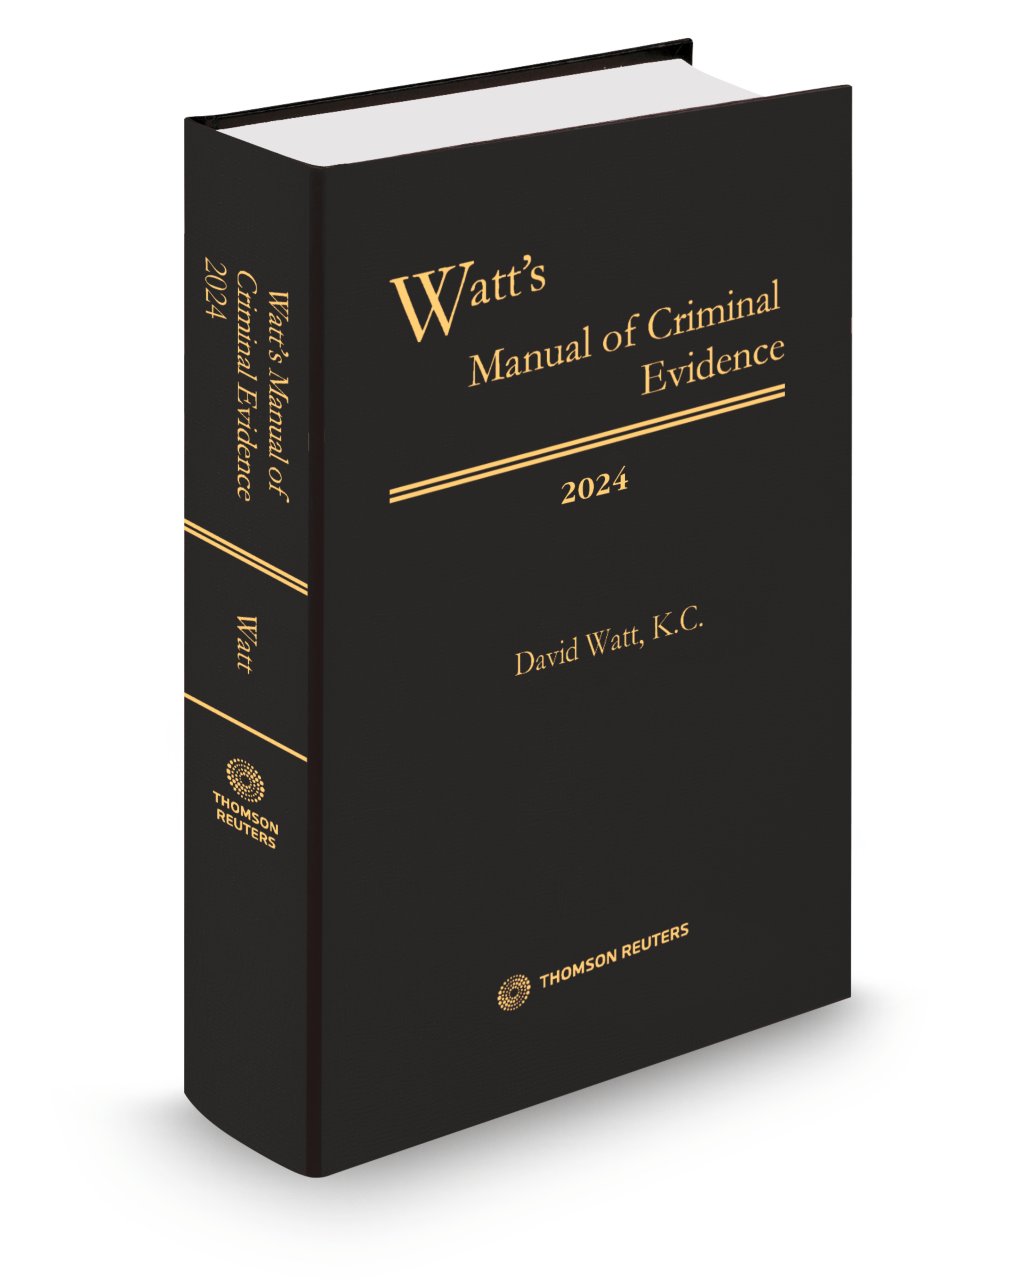 Cover image of Watt's Manual of Criminal Evidence 2024